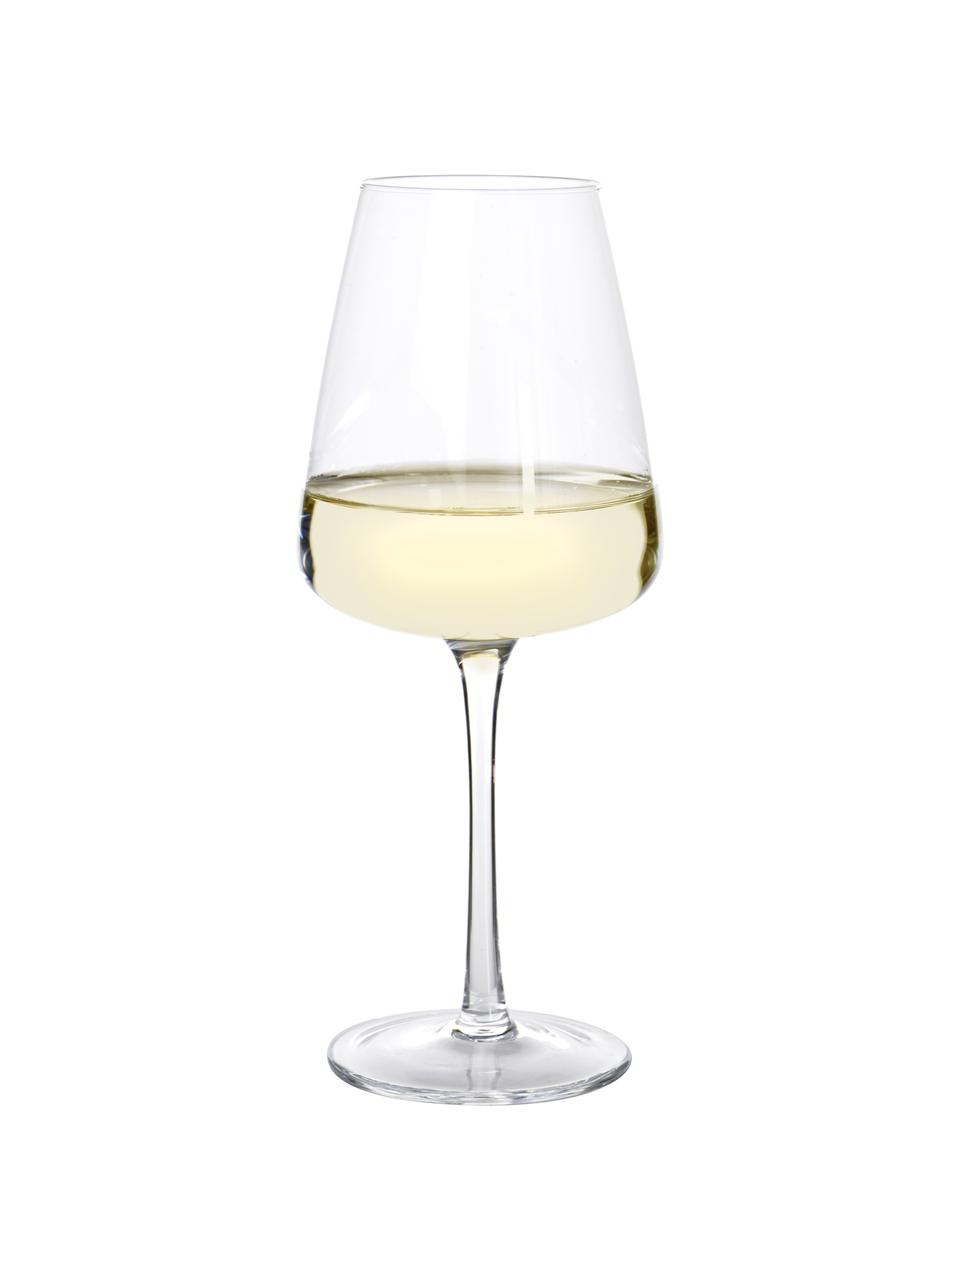 Bicchieri da vino bianco in vetro soffiato Ellery, 4 pezzi, Vetro, Trasparente, Ø 9 x Alt. 21 cm